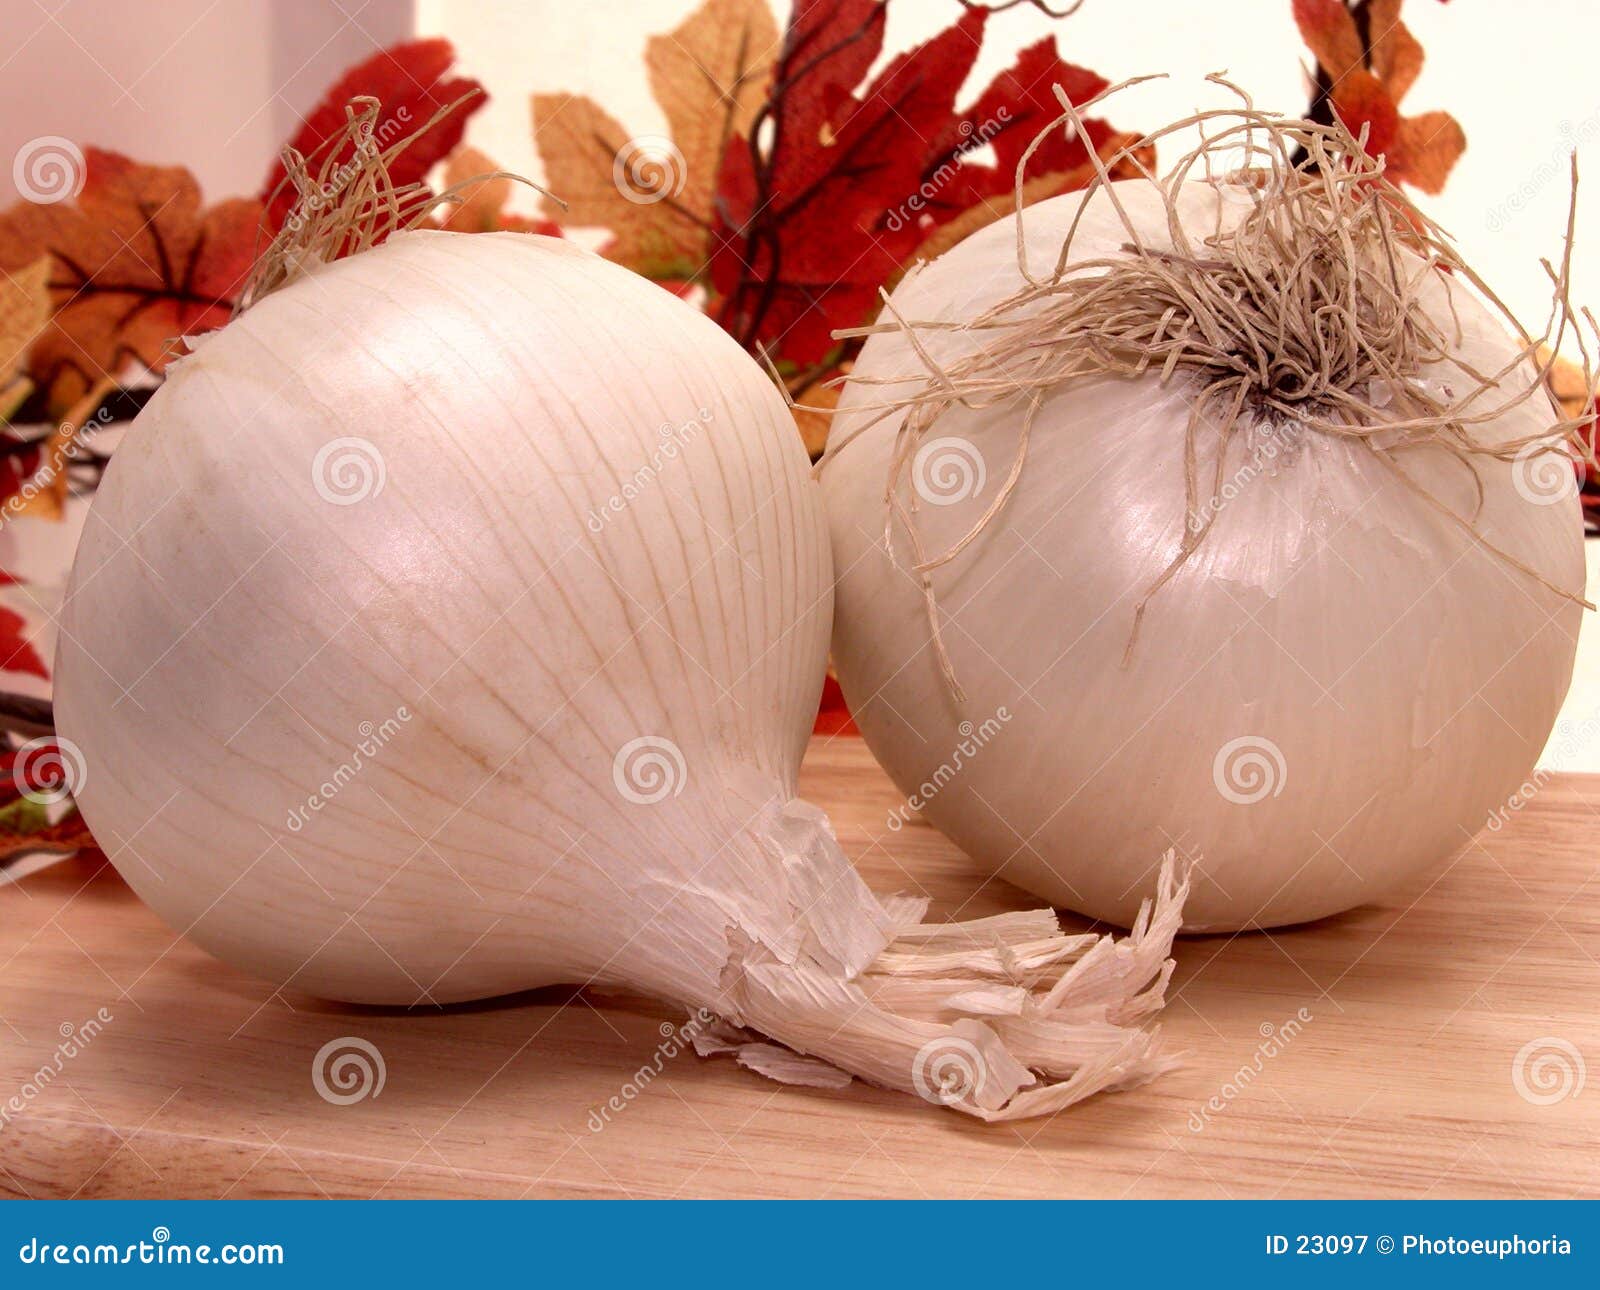 food: white onions